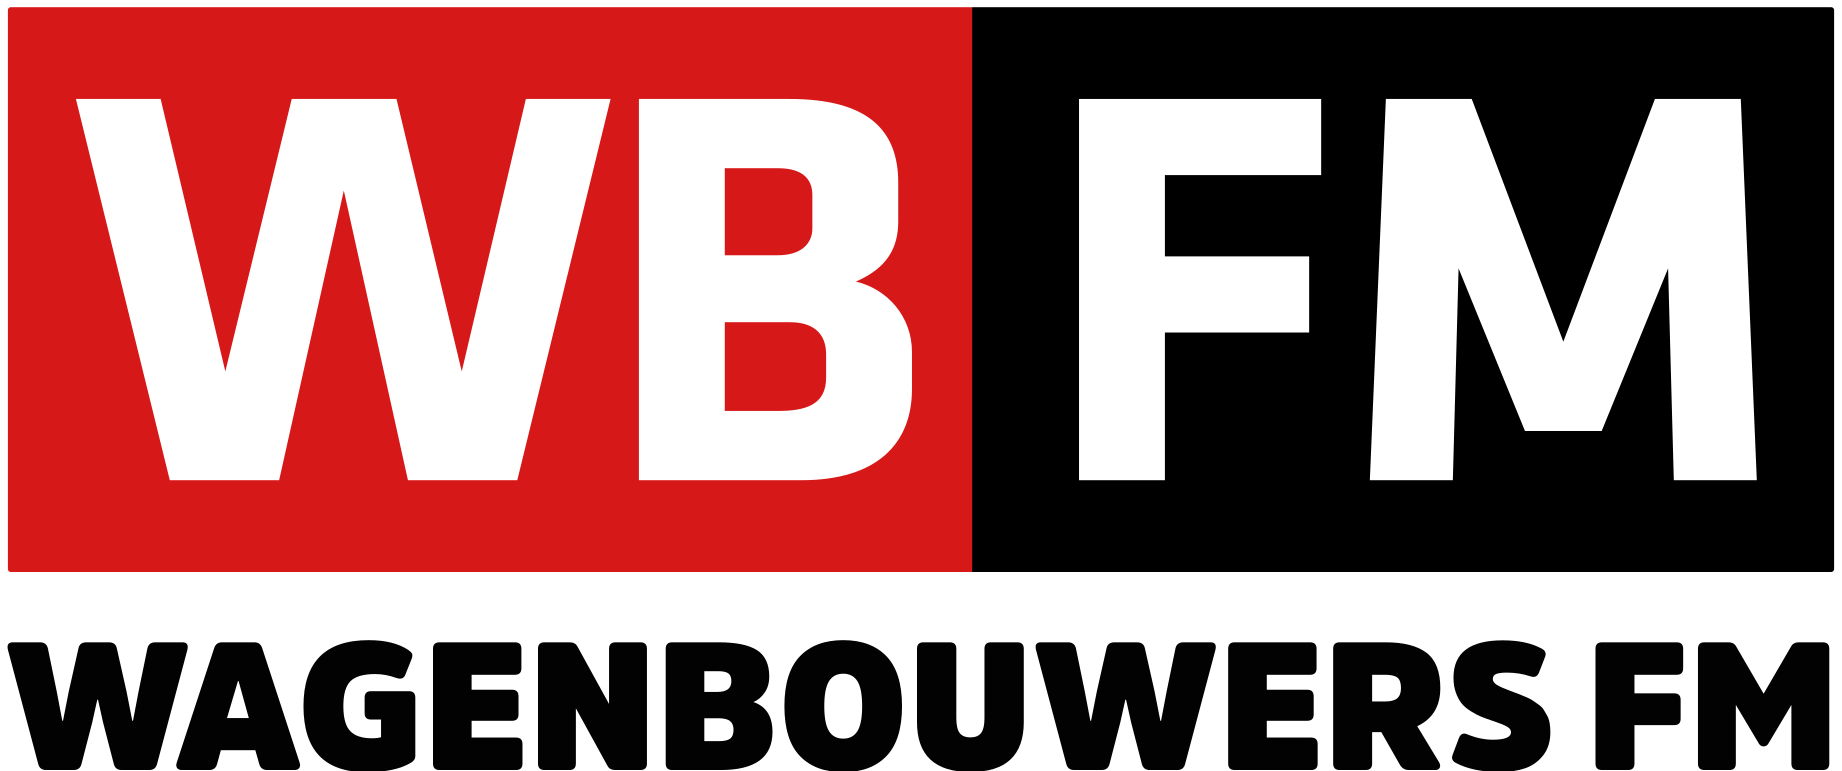 logo Wagenbouwers FM